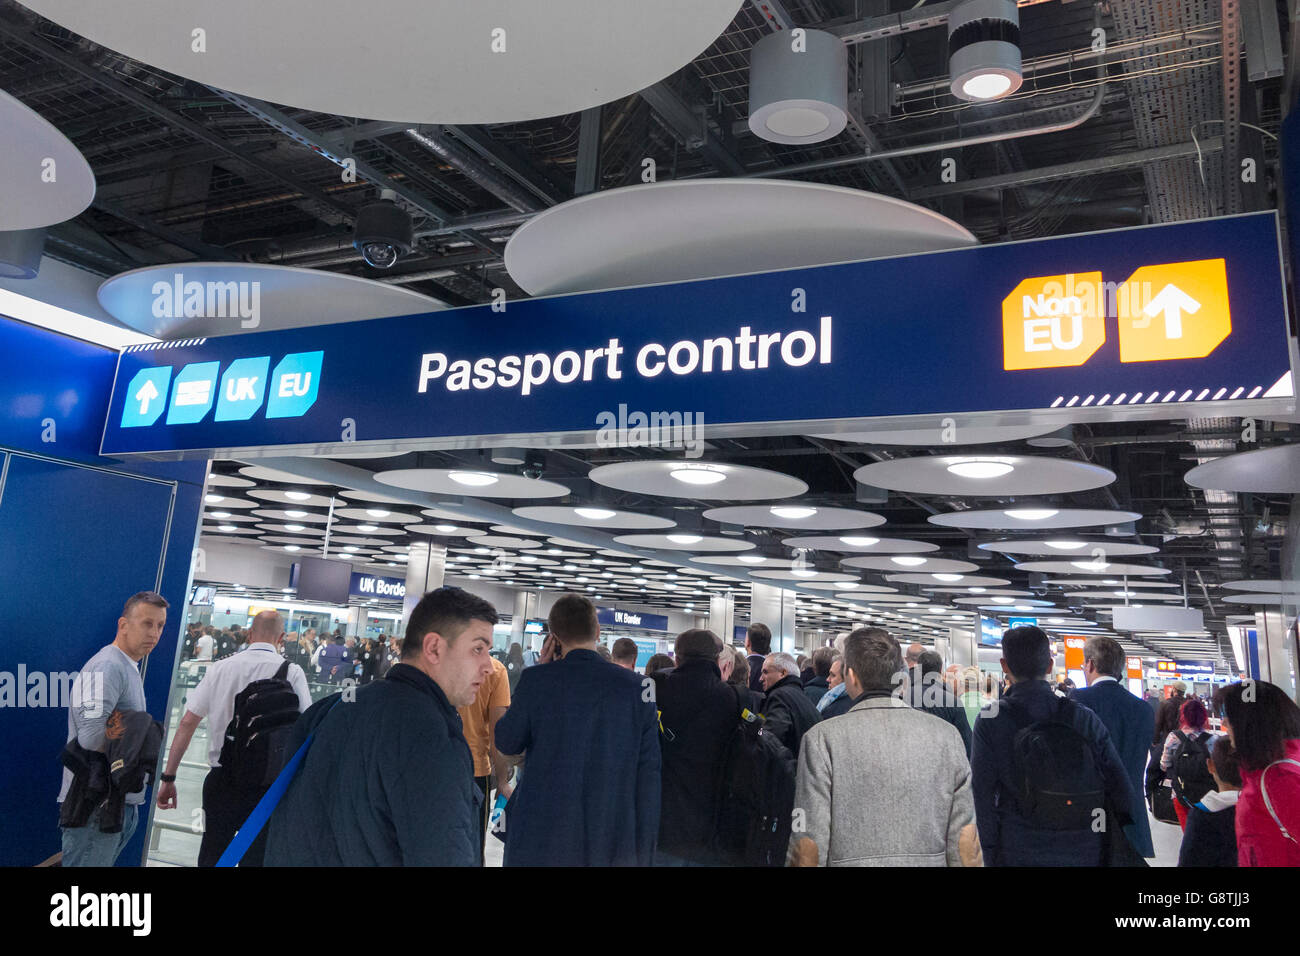 UK border passport control at Heathrow airport, London, England Stock Photo